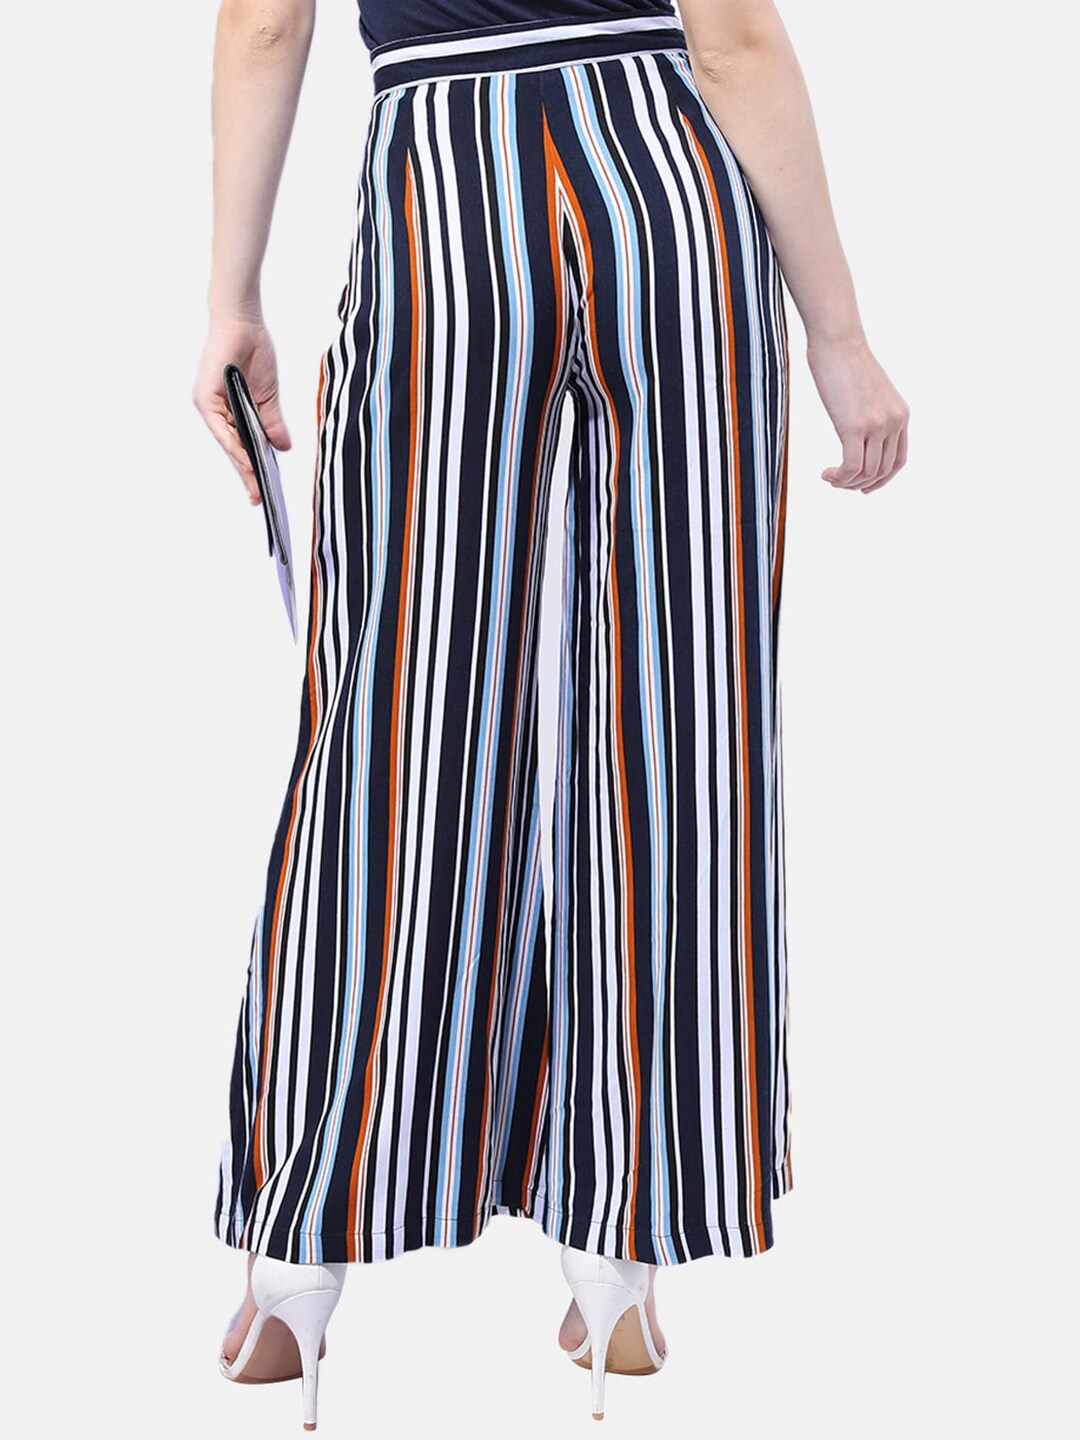 Shop Women Striped Wide Leg Pants Online.